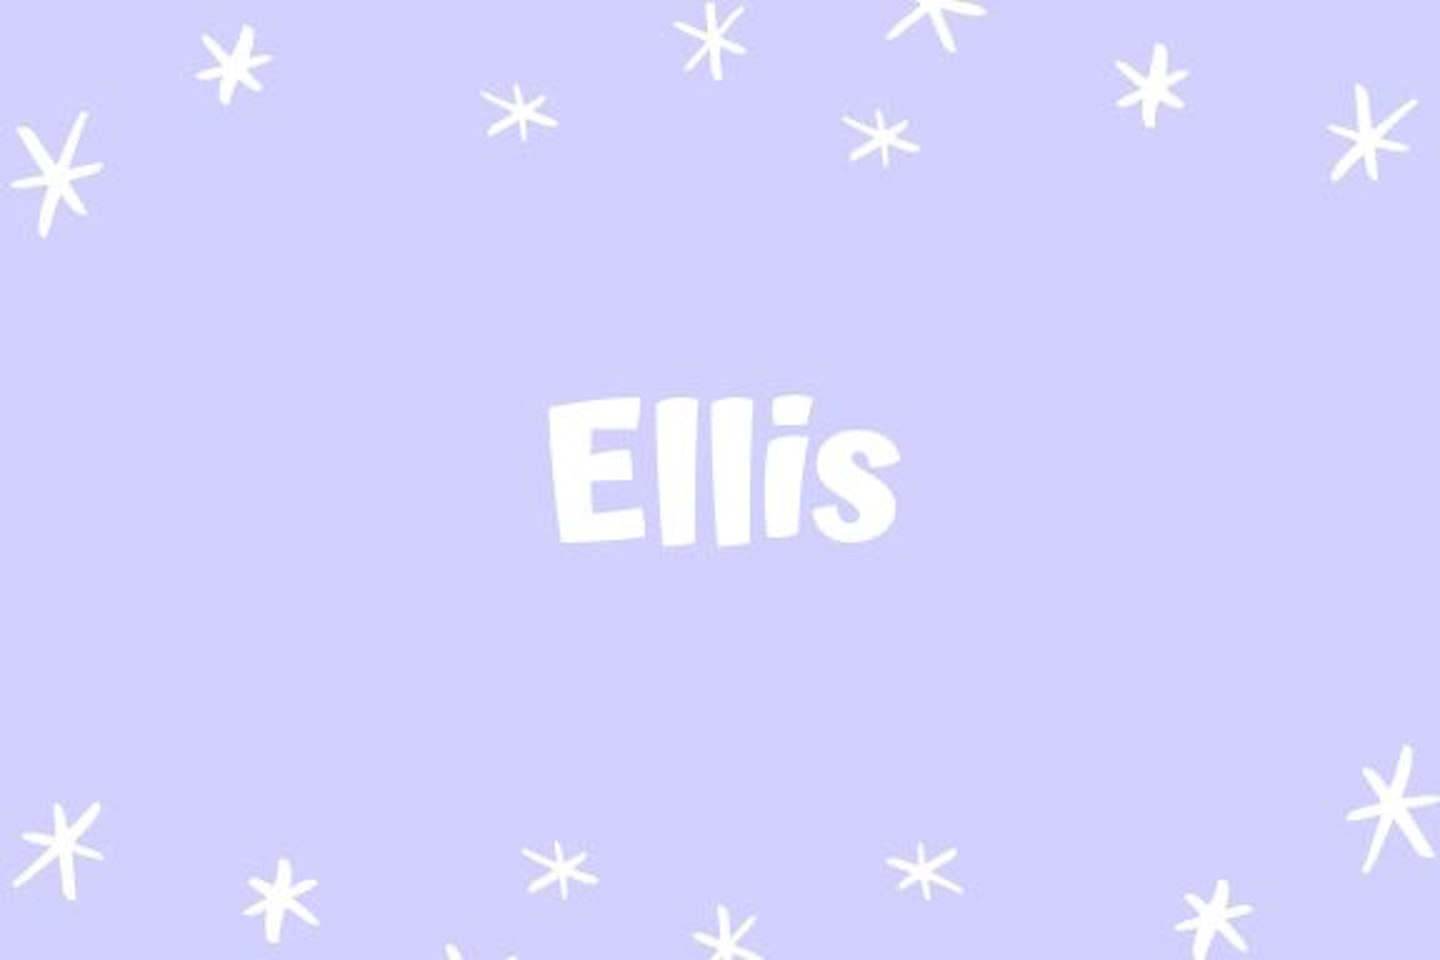 Ellis